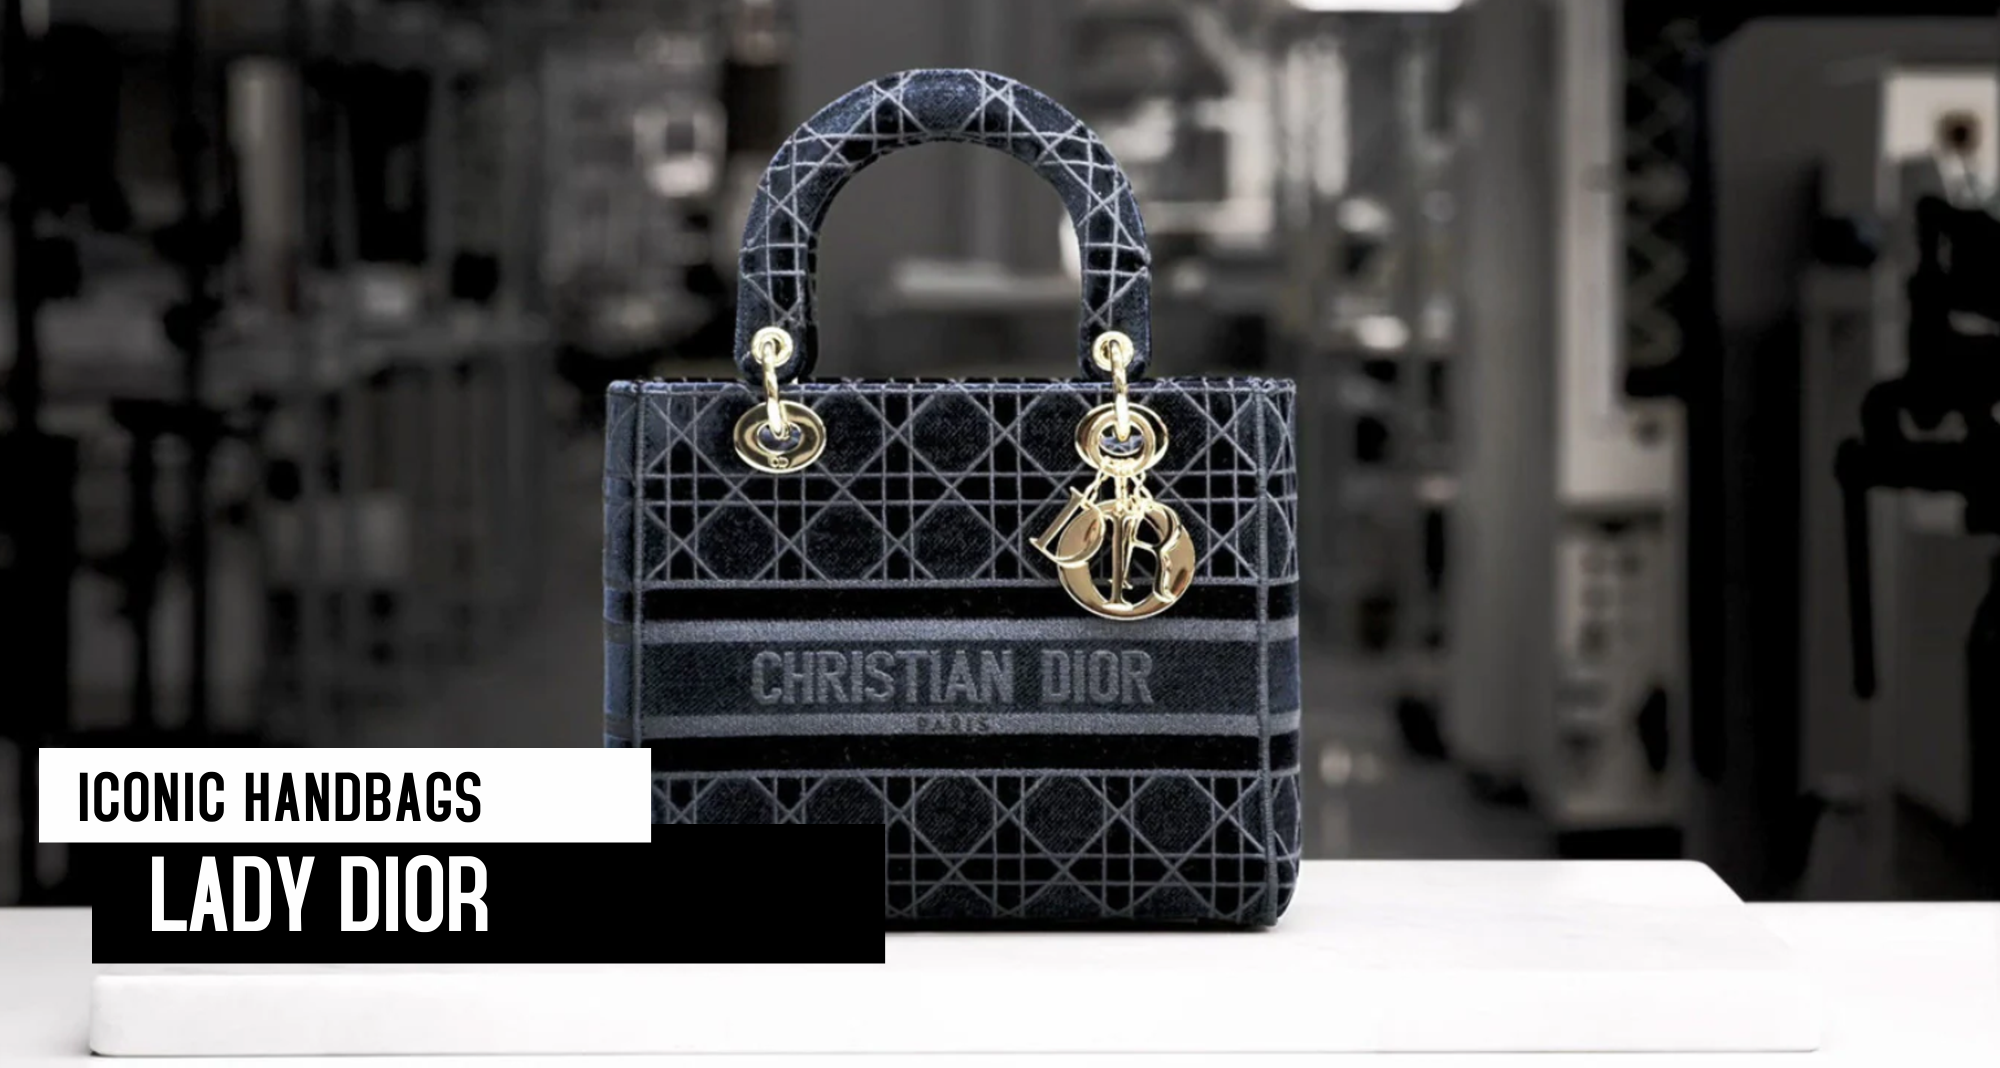 Iconic Handbags - Lady Dior